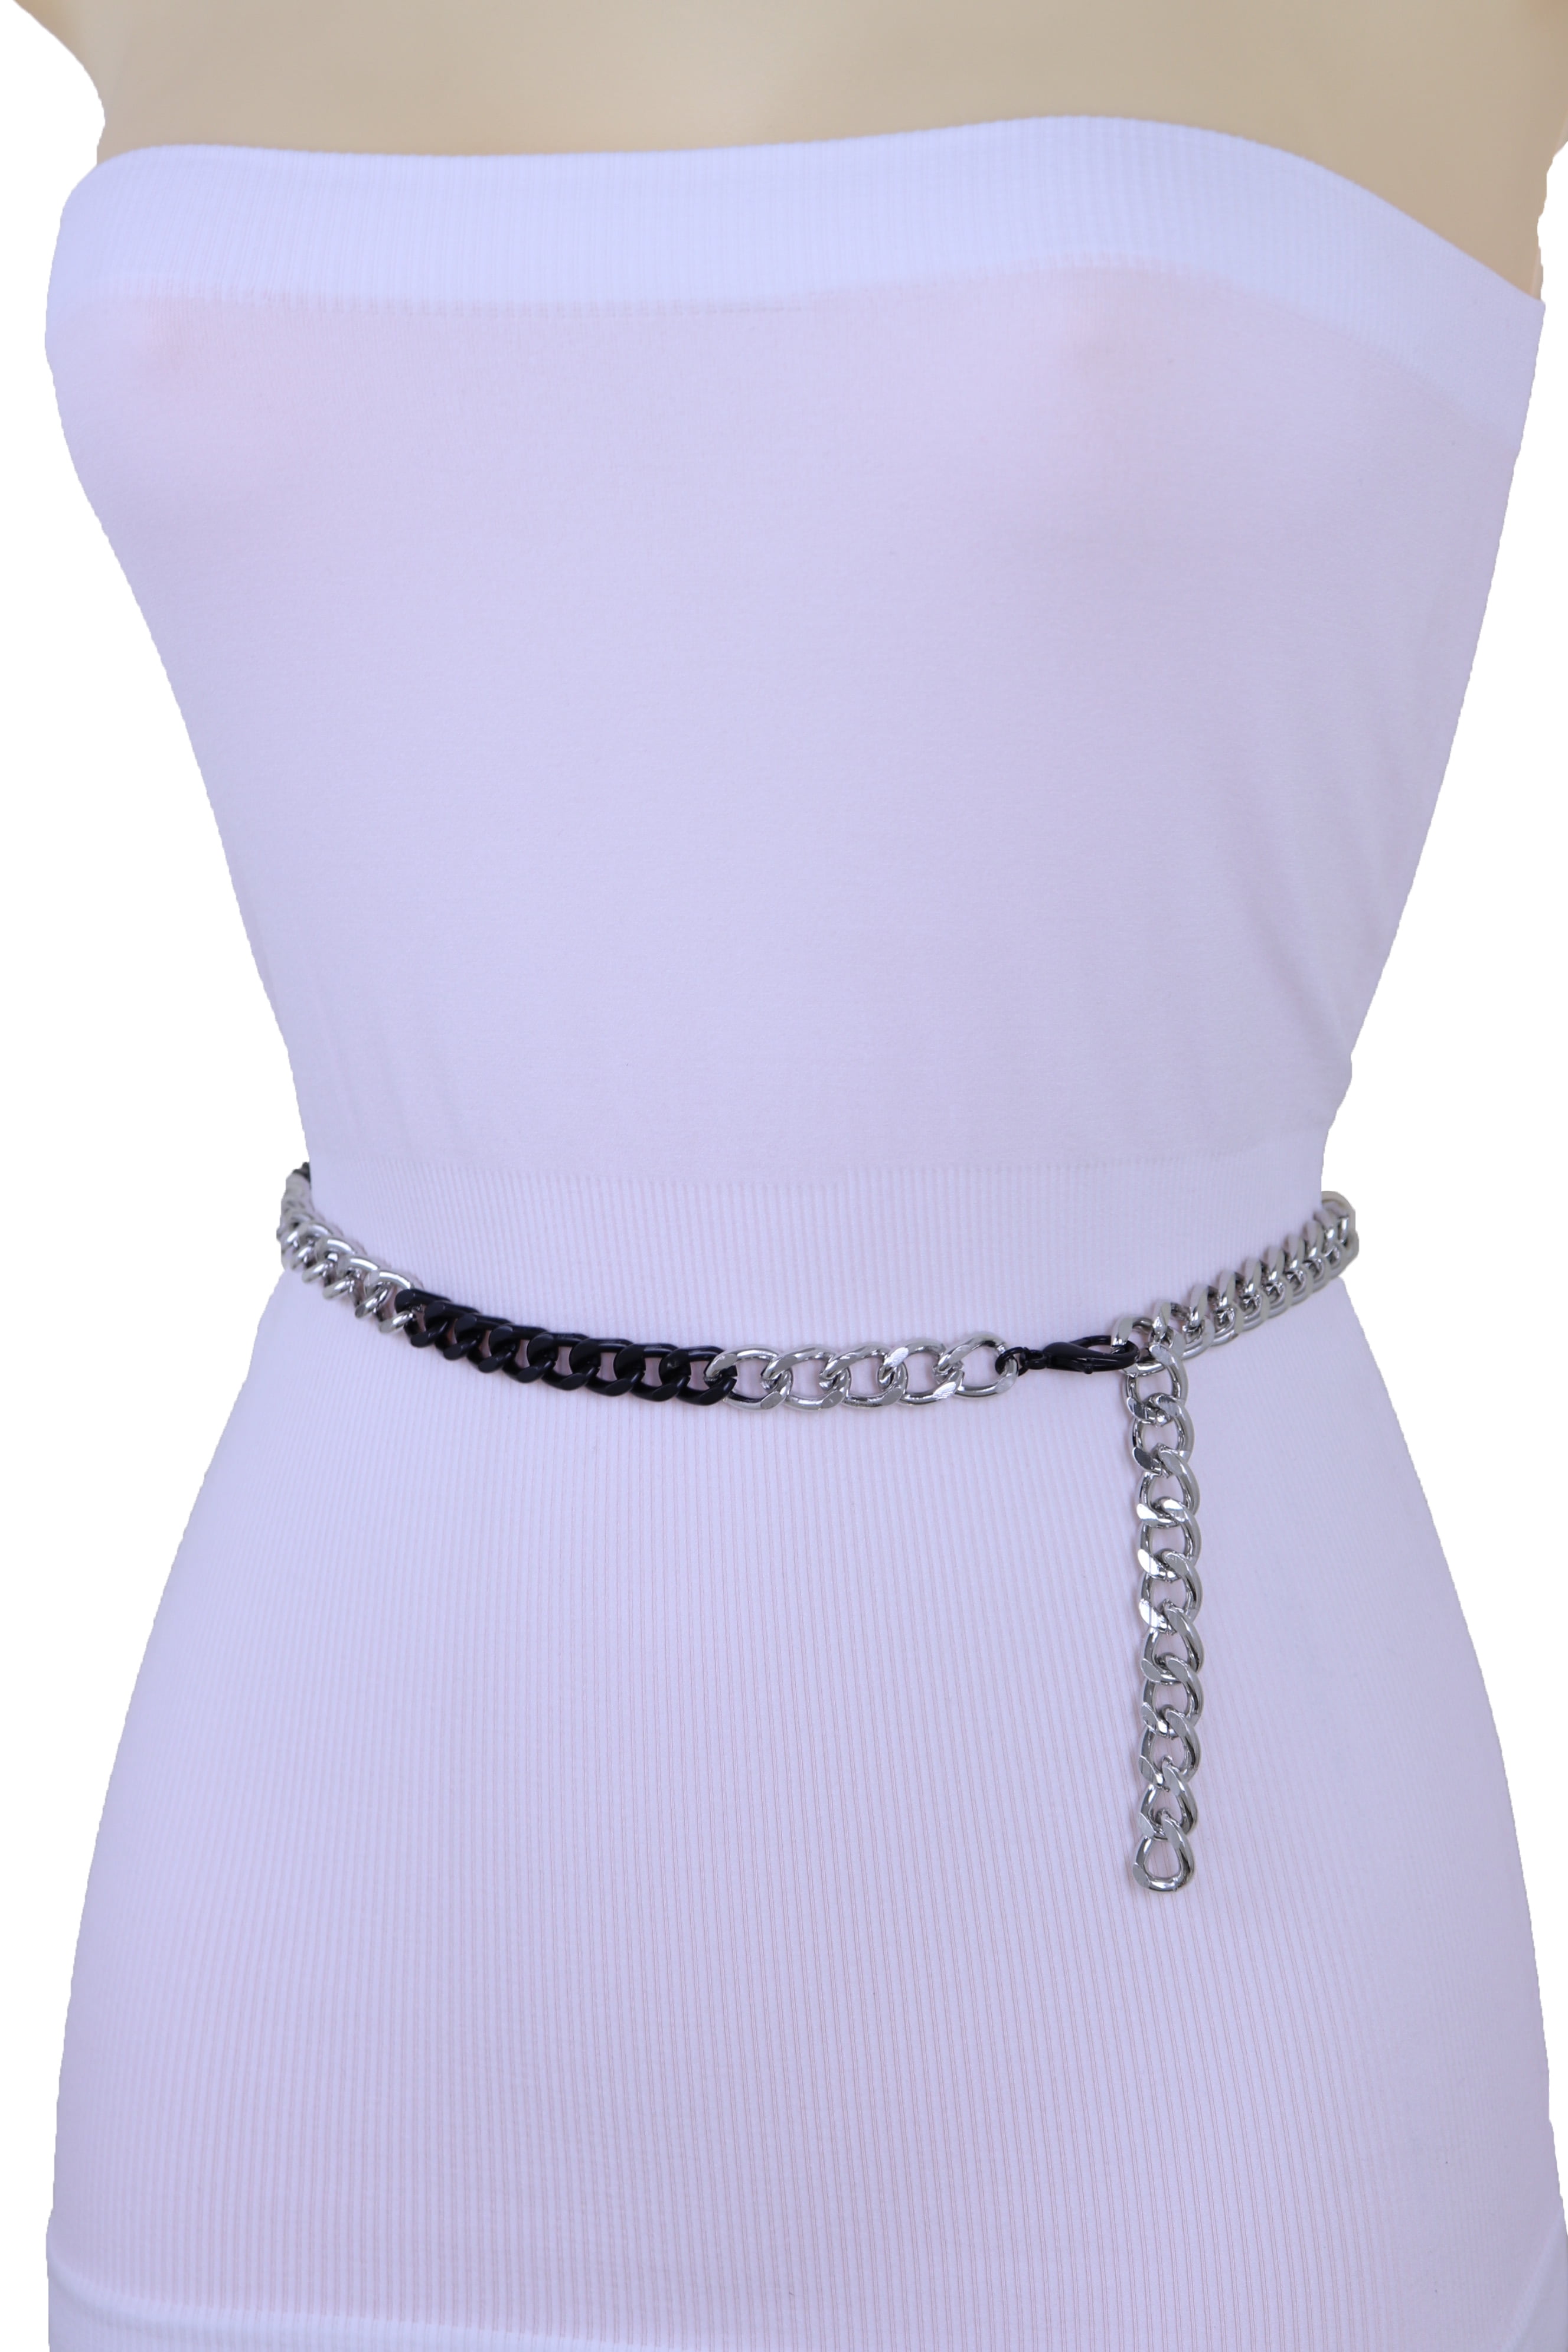 Women Thin Belt Hip Waist Silver Metal Chain Blue Square Fashion Skinny M L XL 